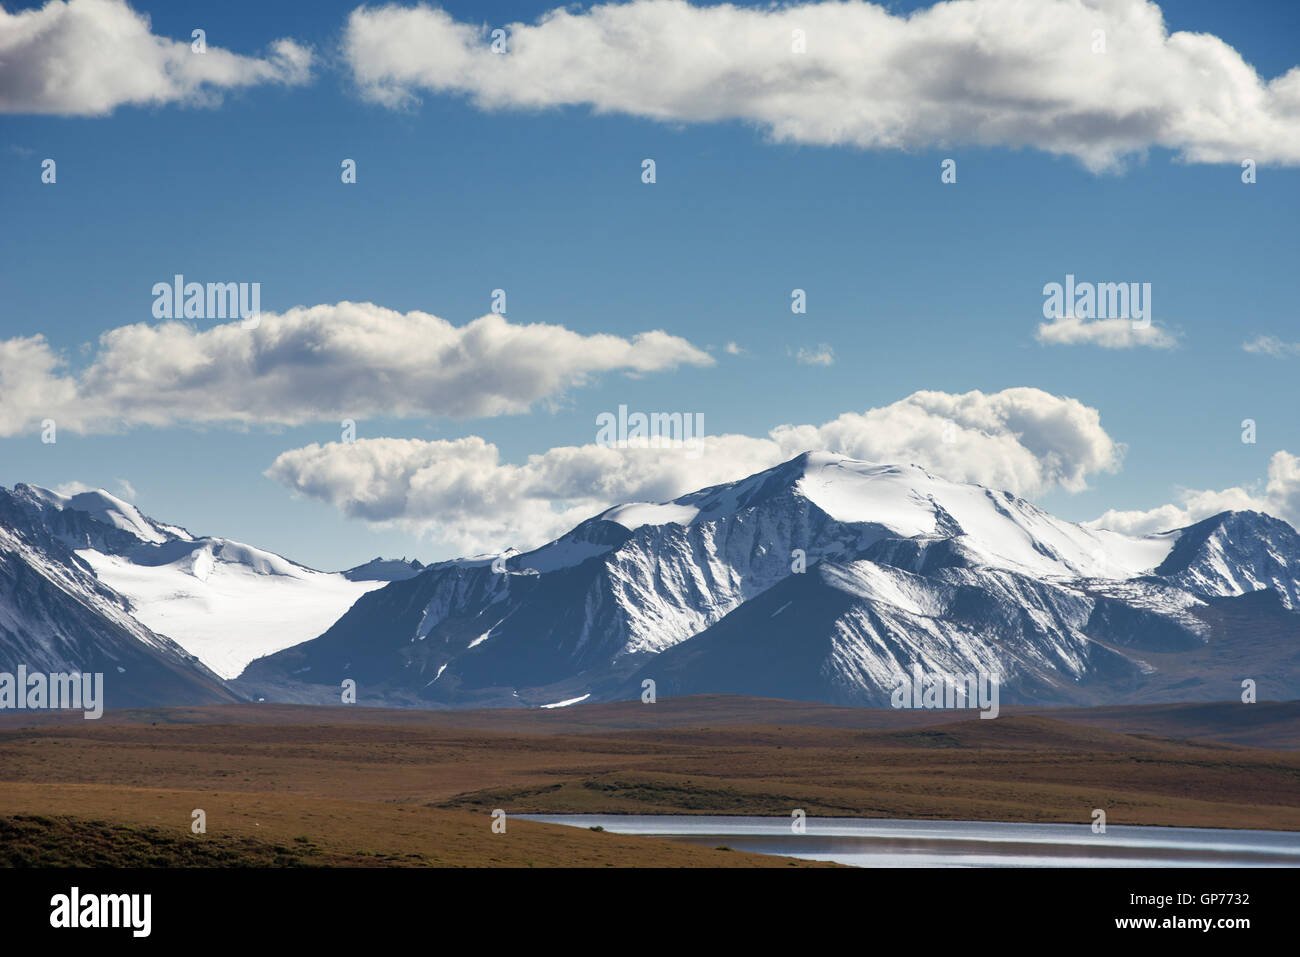 Big snowy mountain peaks on blue sky backdrop Stock Photo